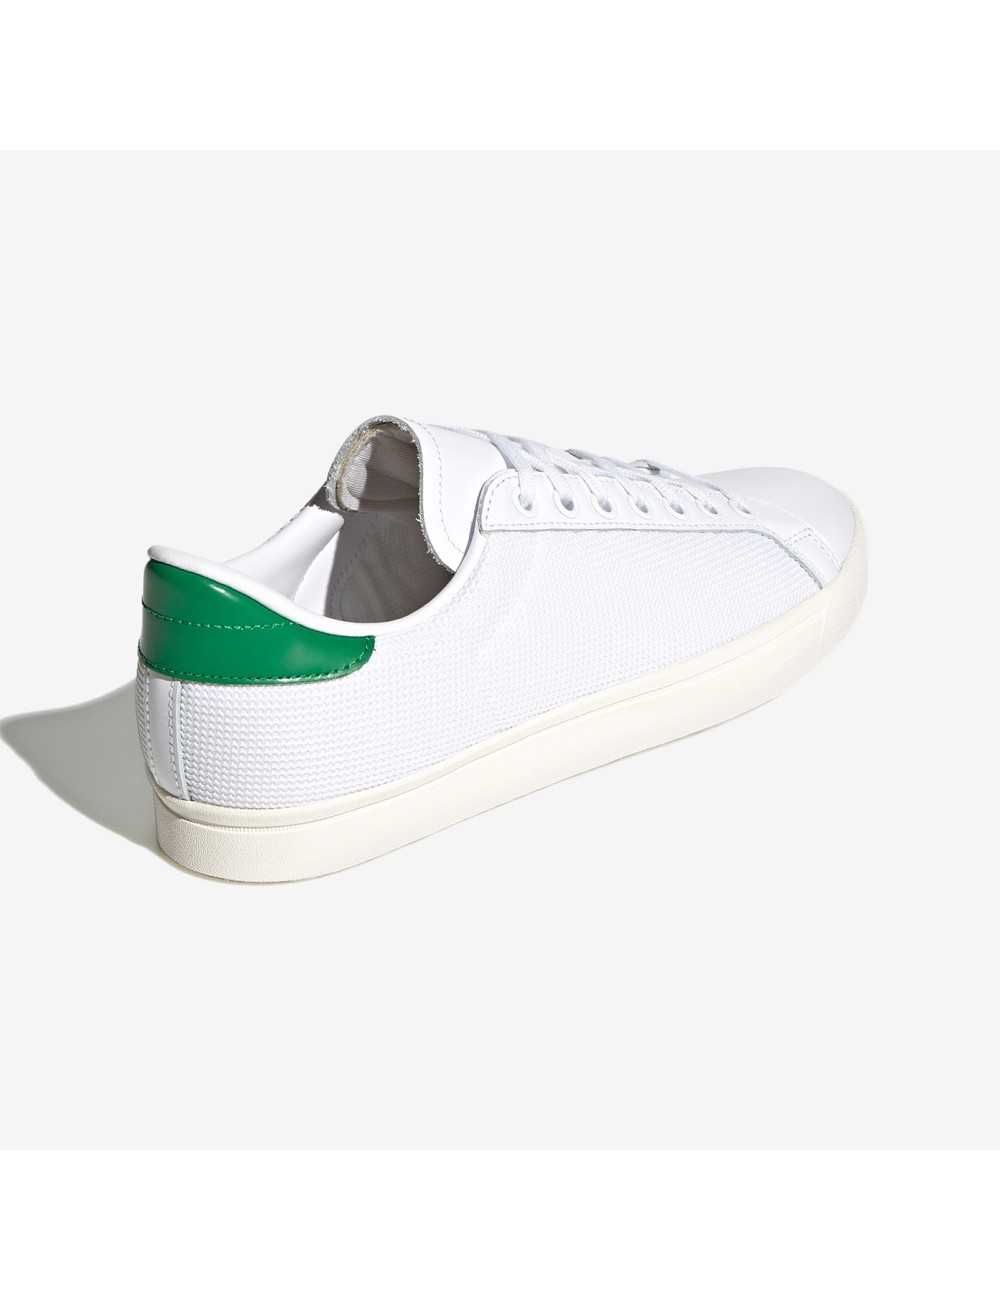 Adidas Rod Laver Vintage scarpe unisex bianco verde - Scarpe Uomo Sportive